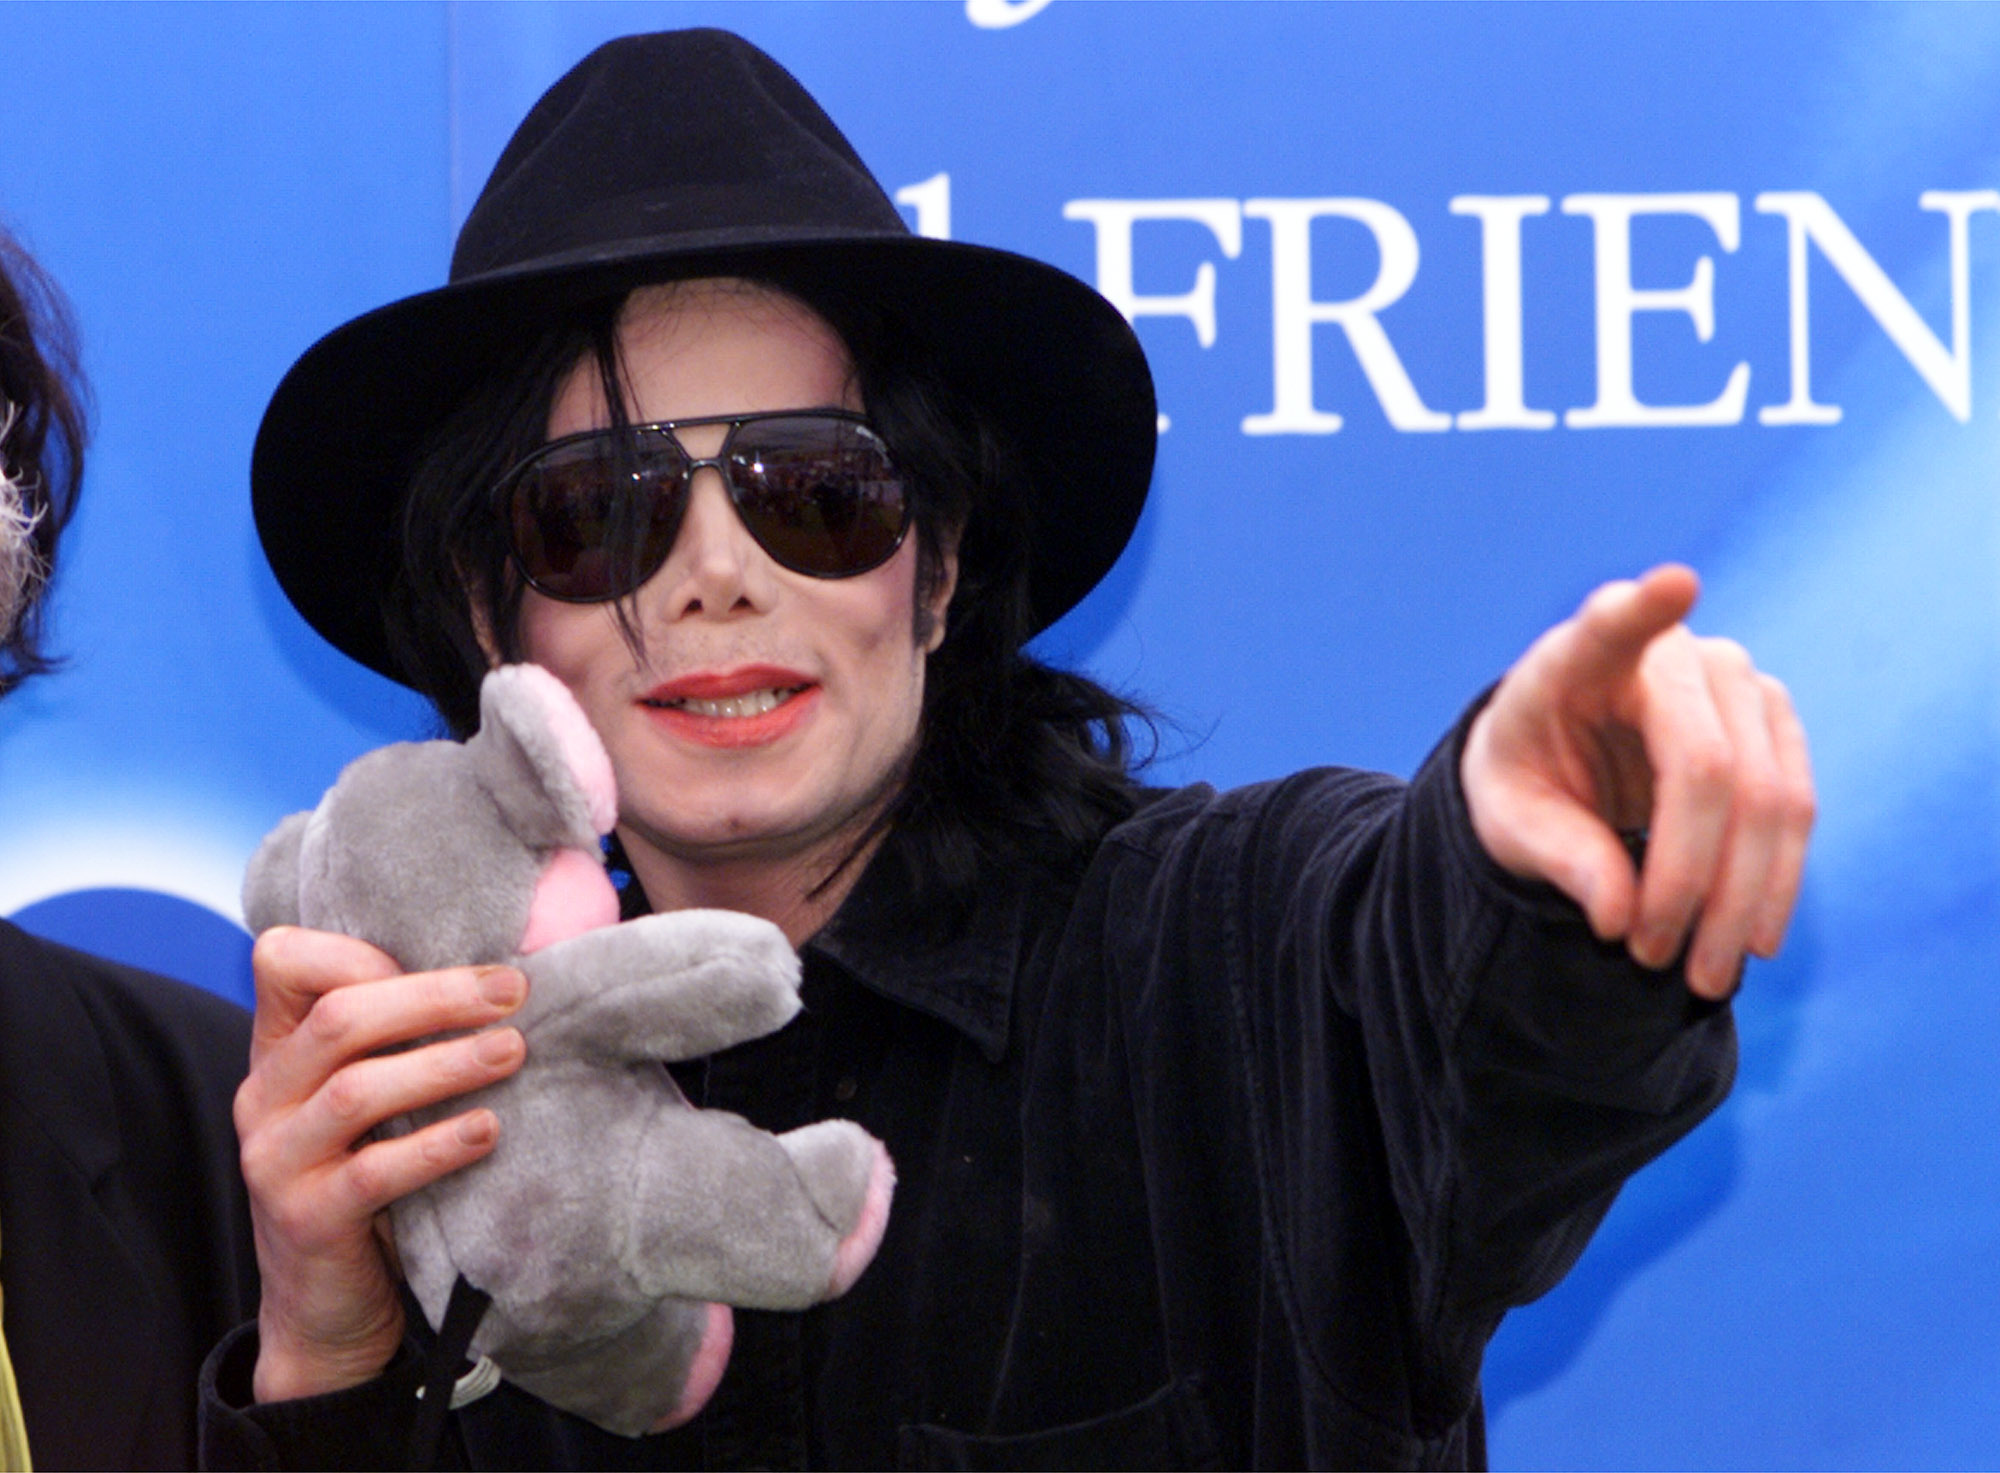 Michael Jackson besaba y acariciaba niños en Neverland, asegura exempleada